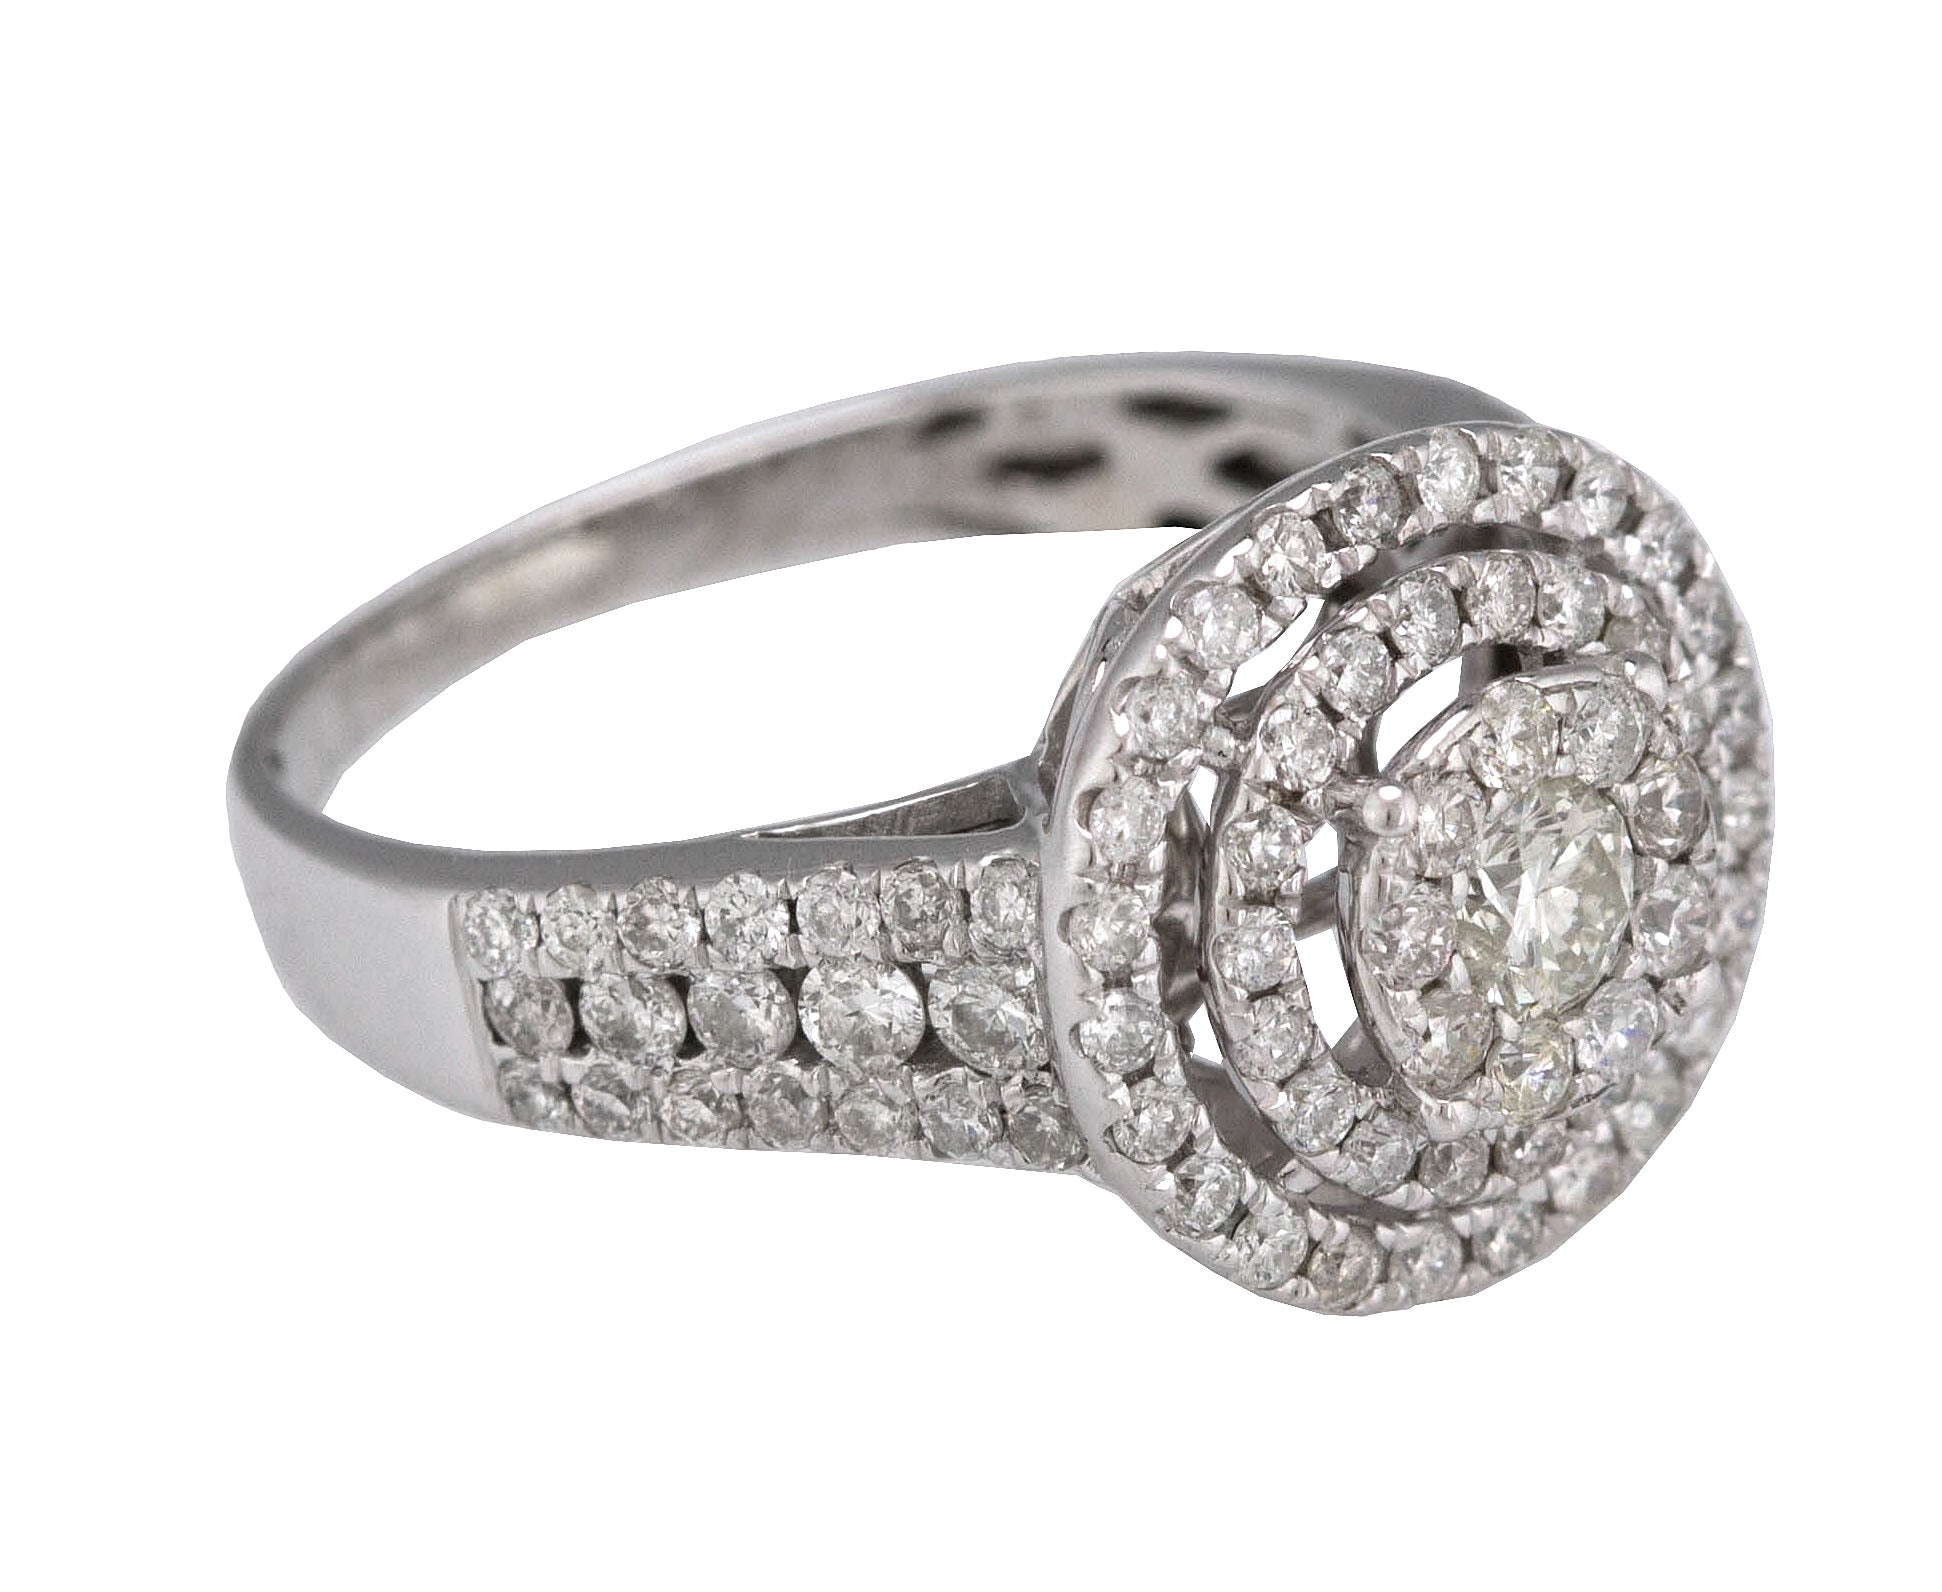 Ladies Modern 14K White Gold 1.09ctw Diamond Halo Invisible Set Engagement Ring